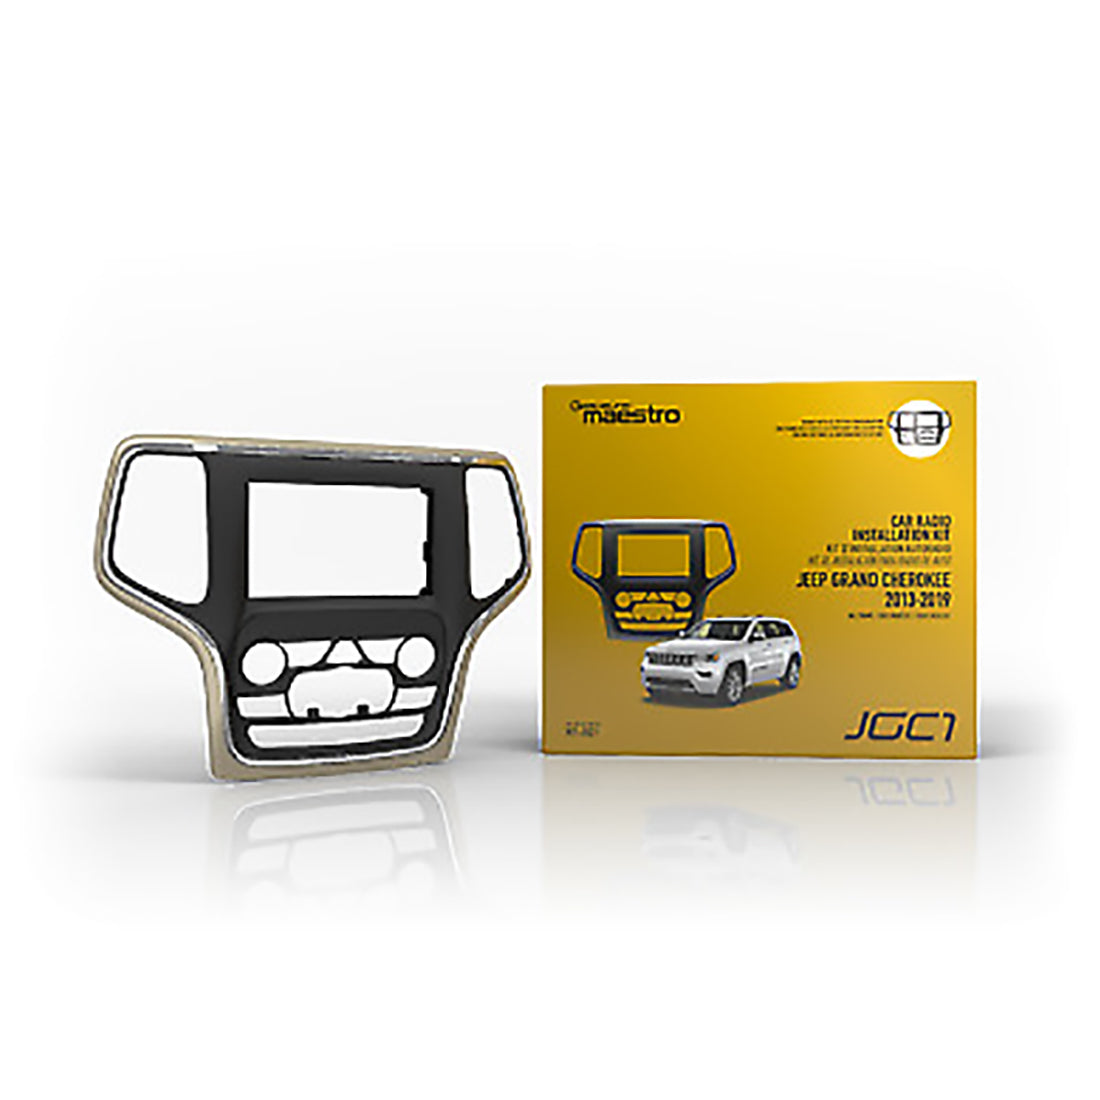 Maestro KIT-JGC1 2 DIN Dash Kit T-Harness for 2014-up Jeep Grand Cherokee Models